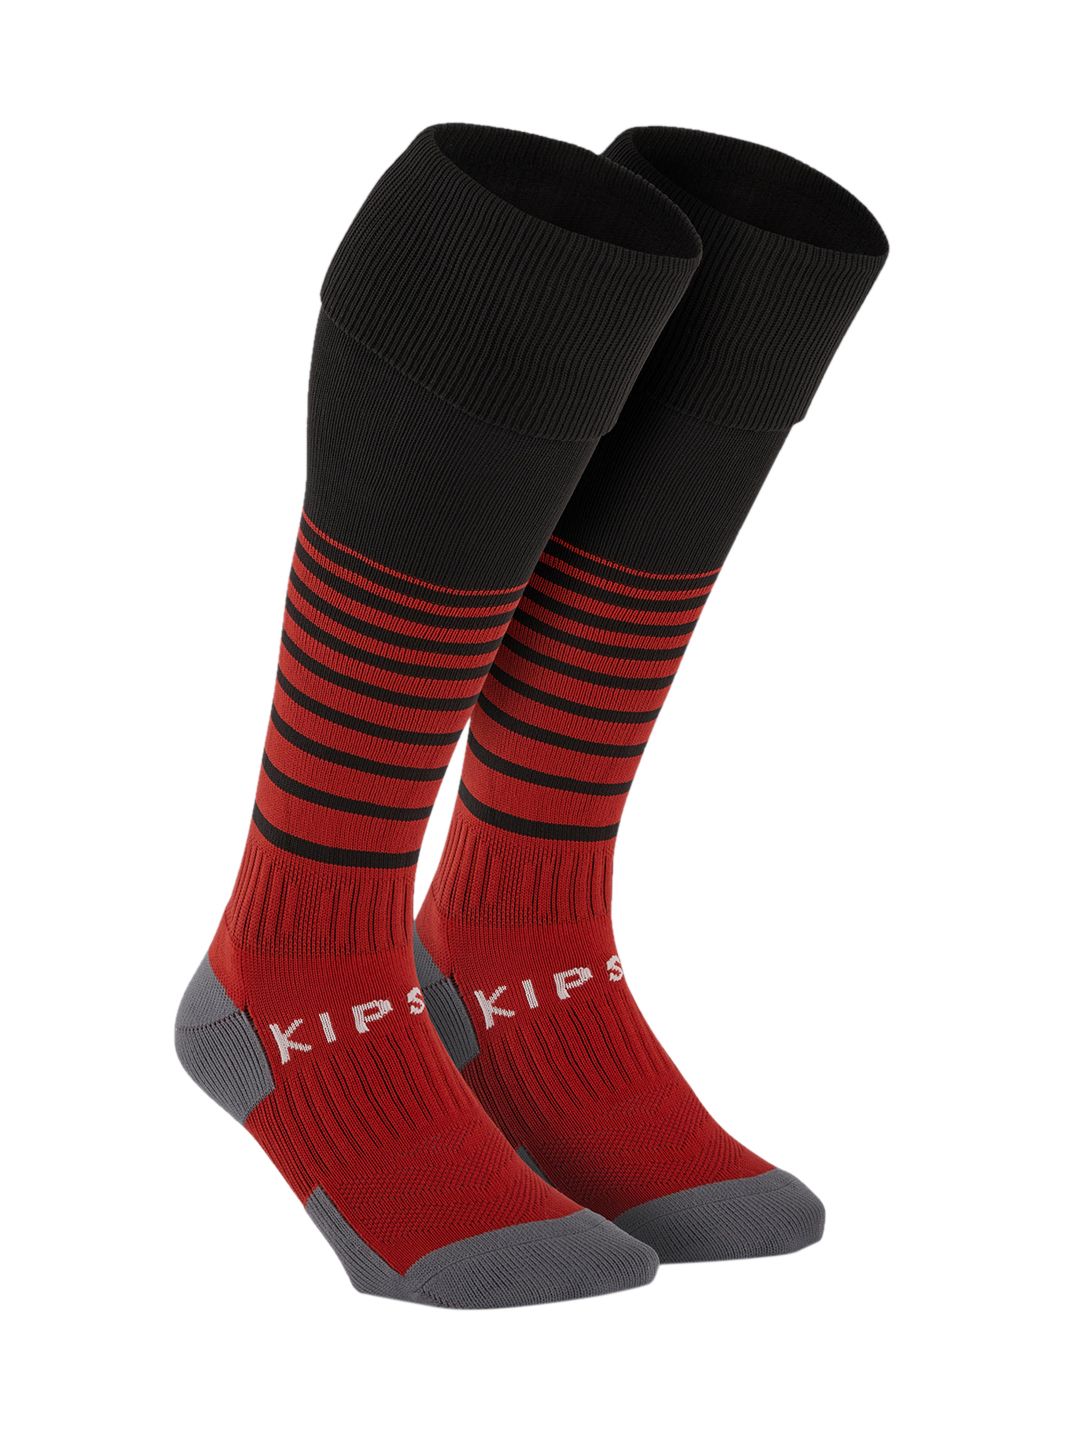 Kipsta By Decathlon Unisex Red & Black Striped Knee-Length Football Socks Price in India